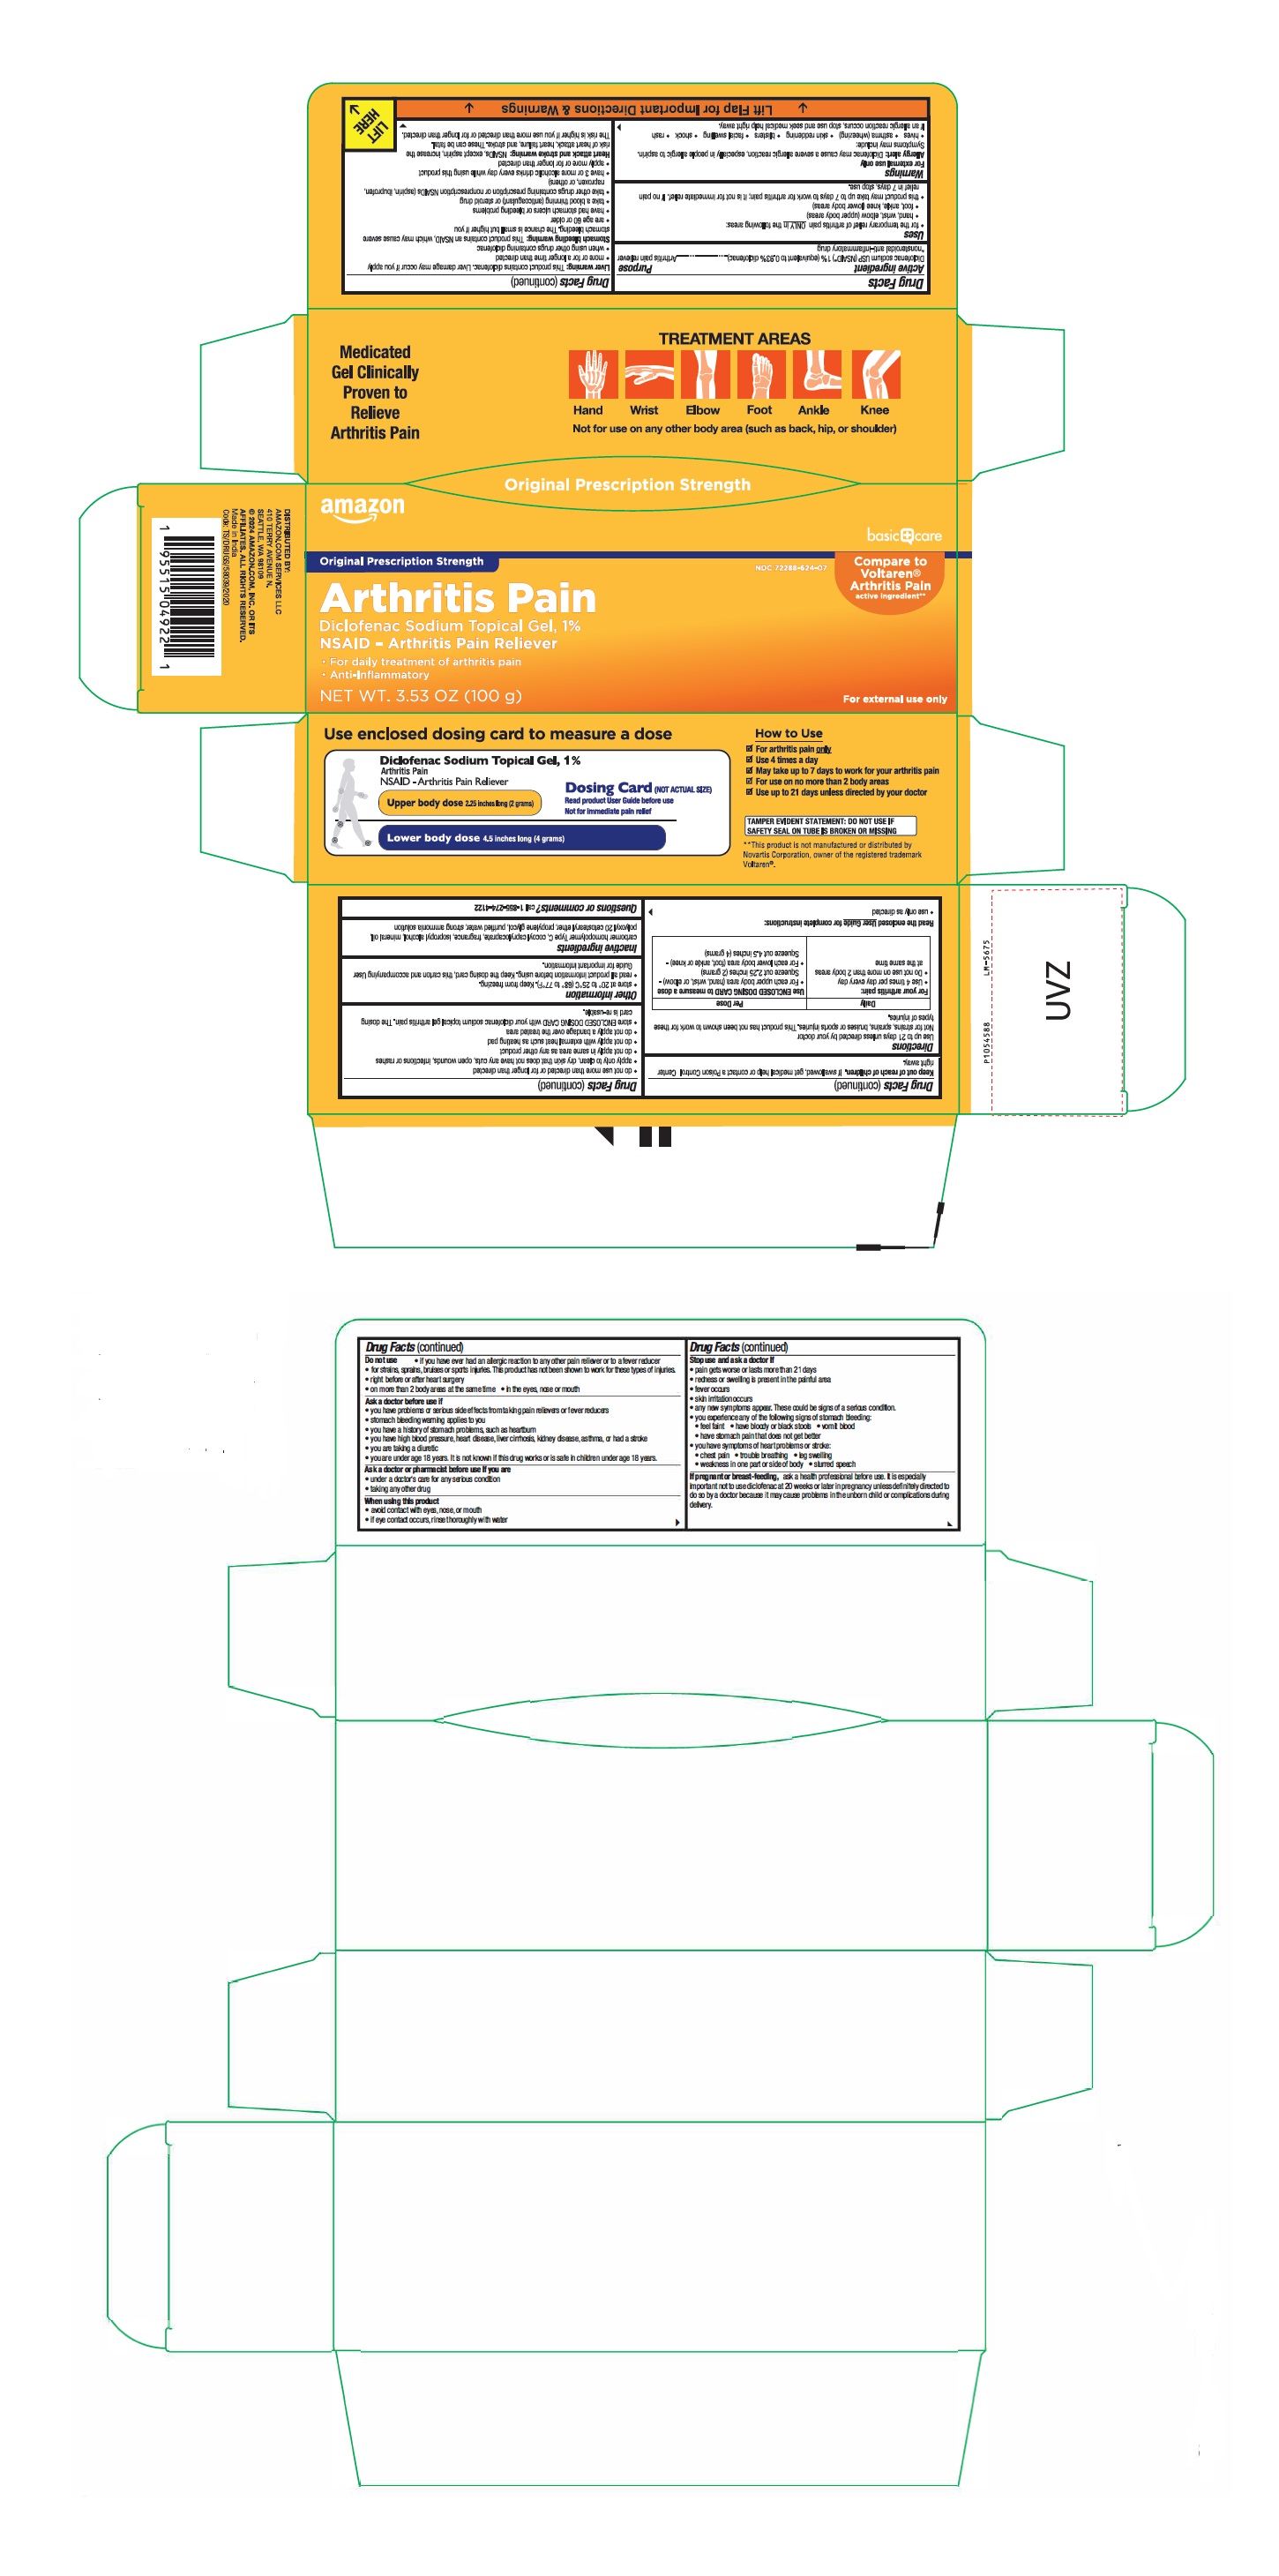 PACKAGE LABEL-PRINCIPAL DISPLAY PANEL - 1% w/w Tube Carton Label (100 g tube)